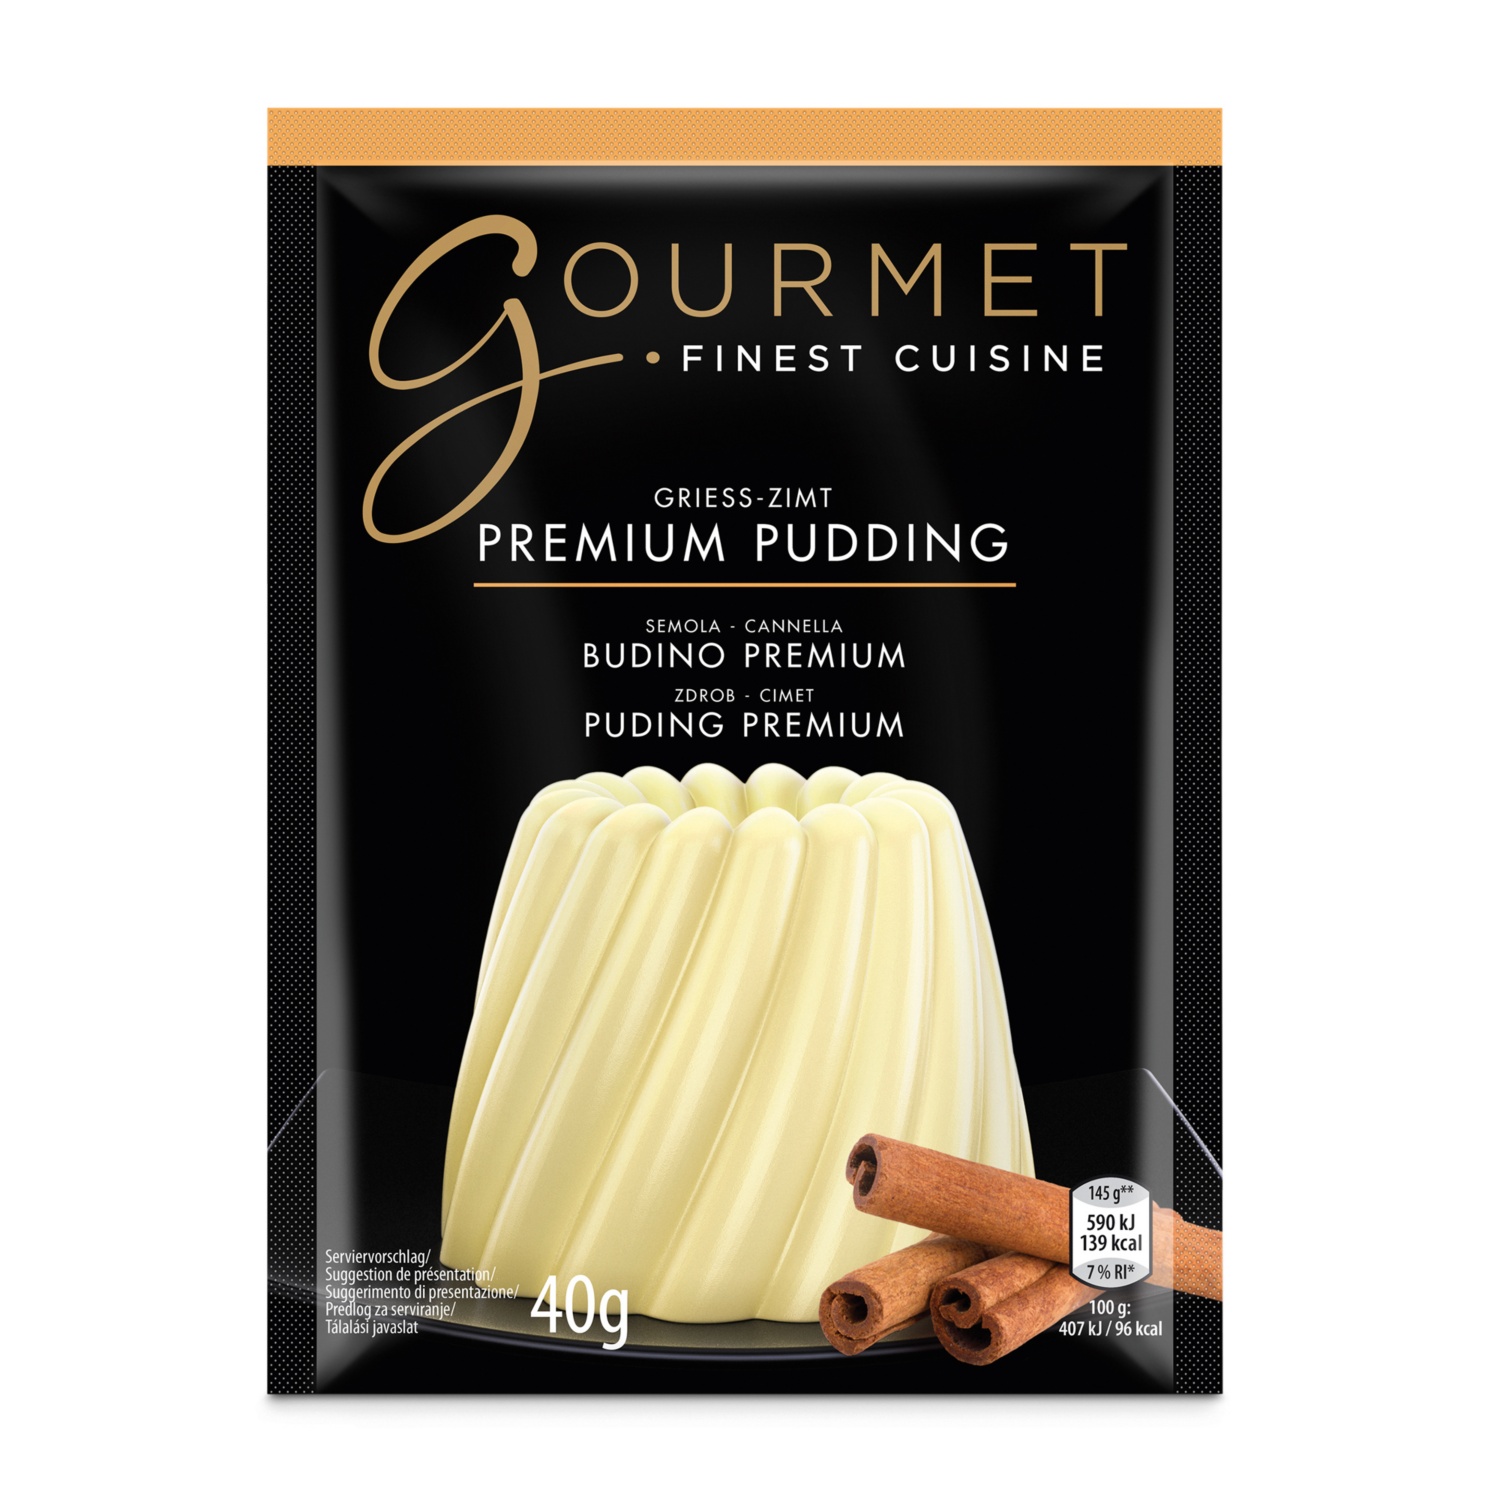 GOURMET Pudding, Griess-Zimt